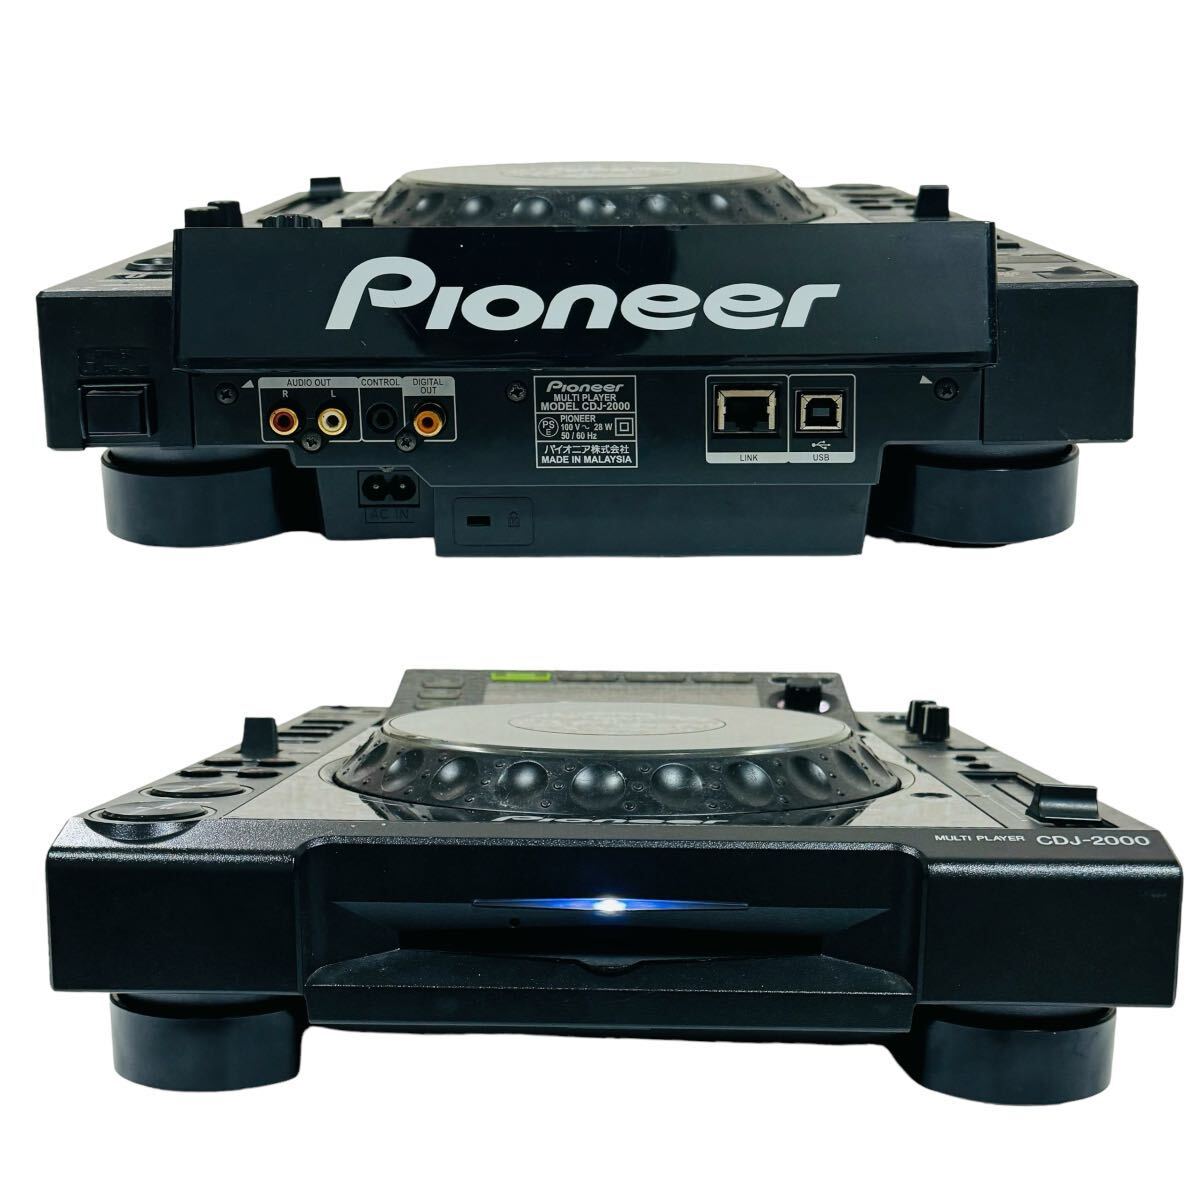 Pioneer CDJ-2000 Professional DJ multi player turntable DJ equipment sound equipment Pioneer CDJ2000